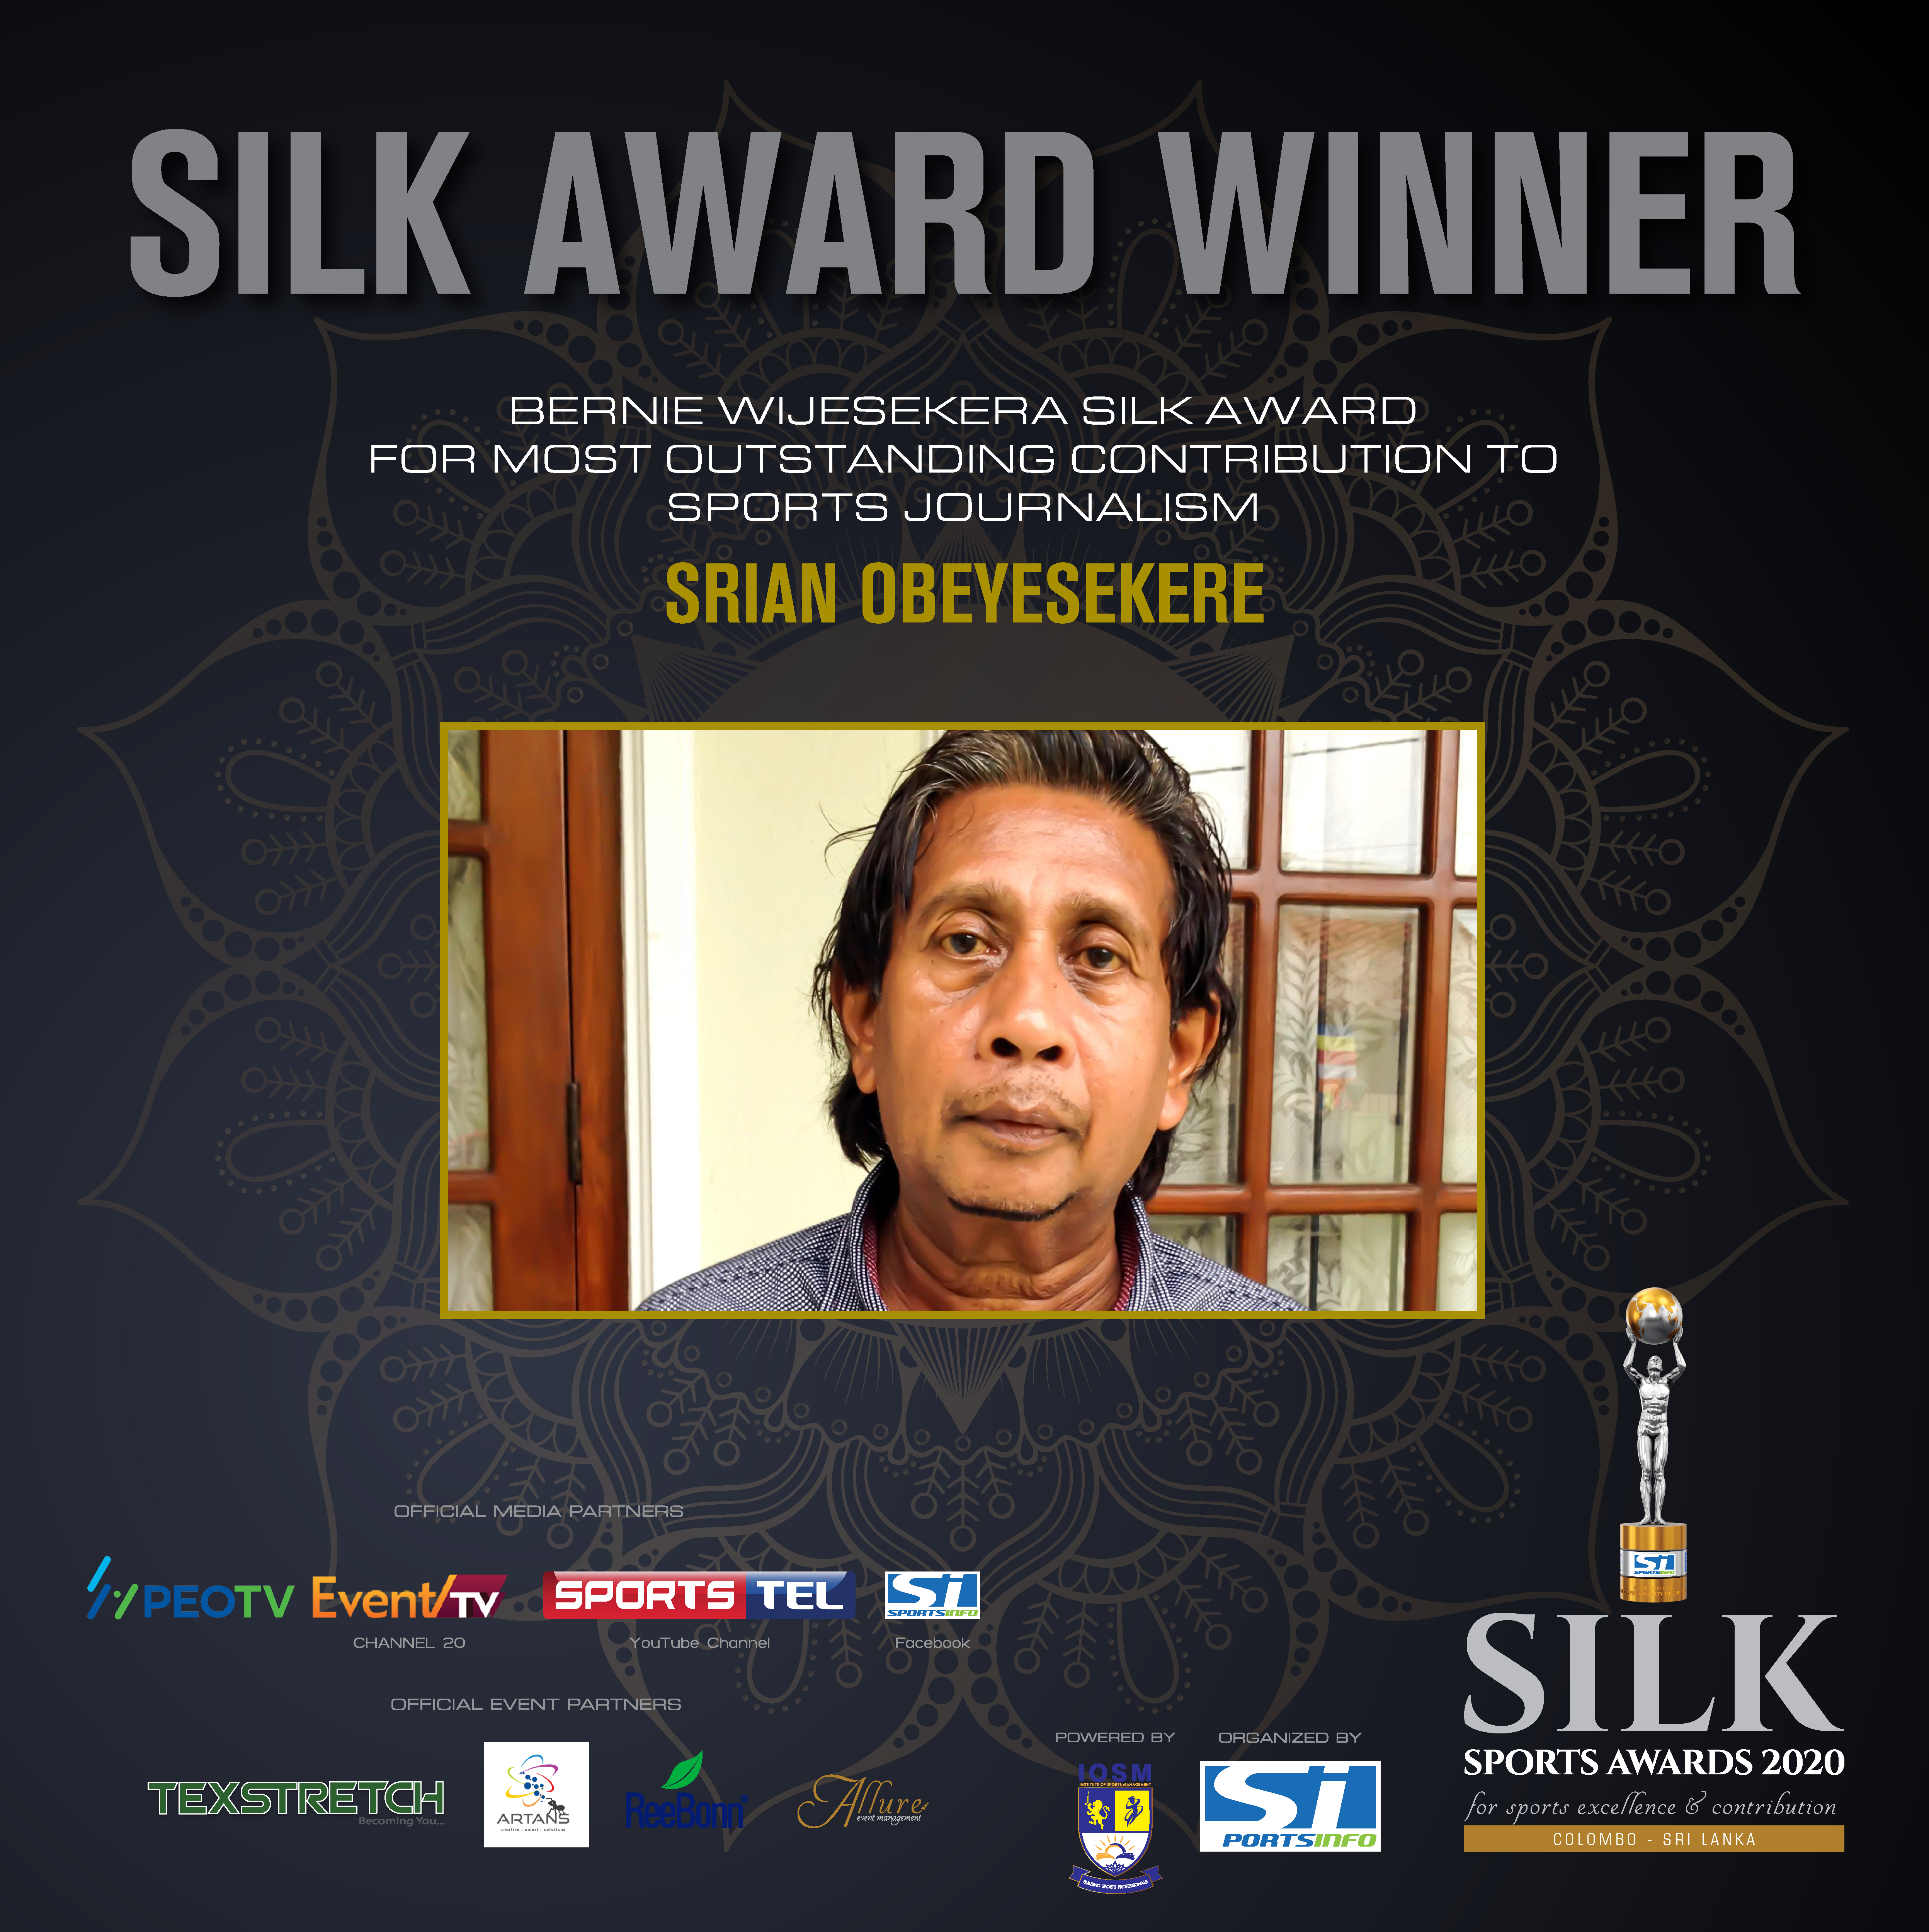 Sri Lanka Cricket writer Srian Obeyesekere wins Major Silk Award 2020 for Outstanding Contribution to Sports